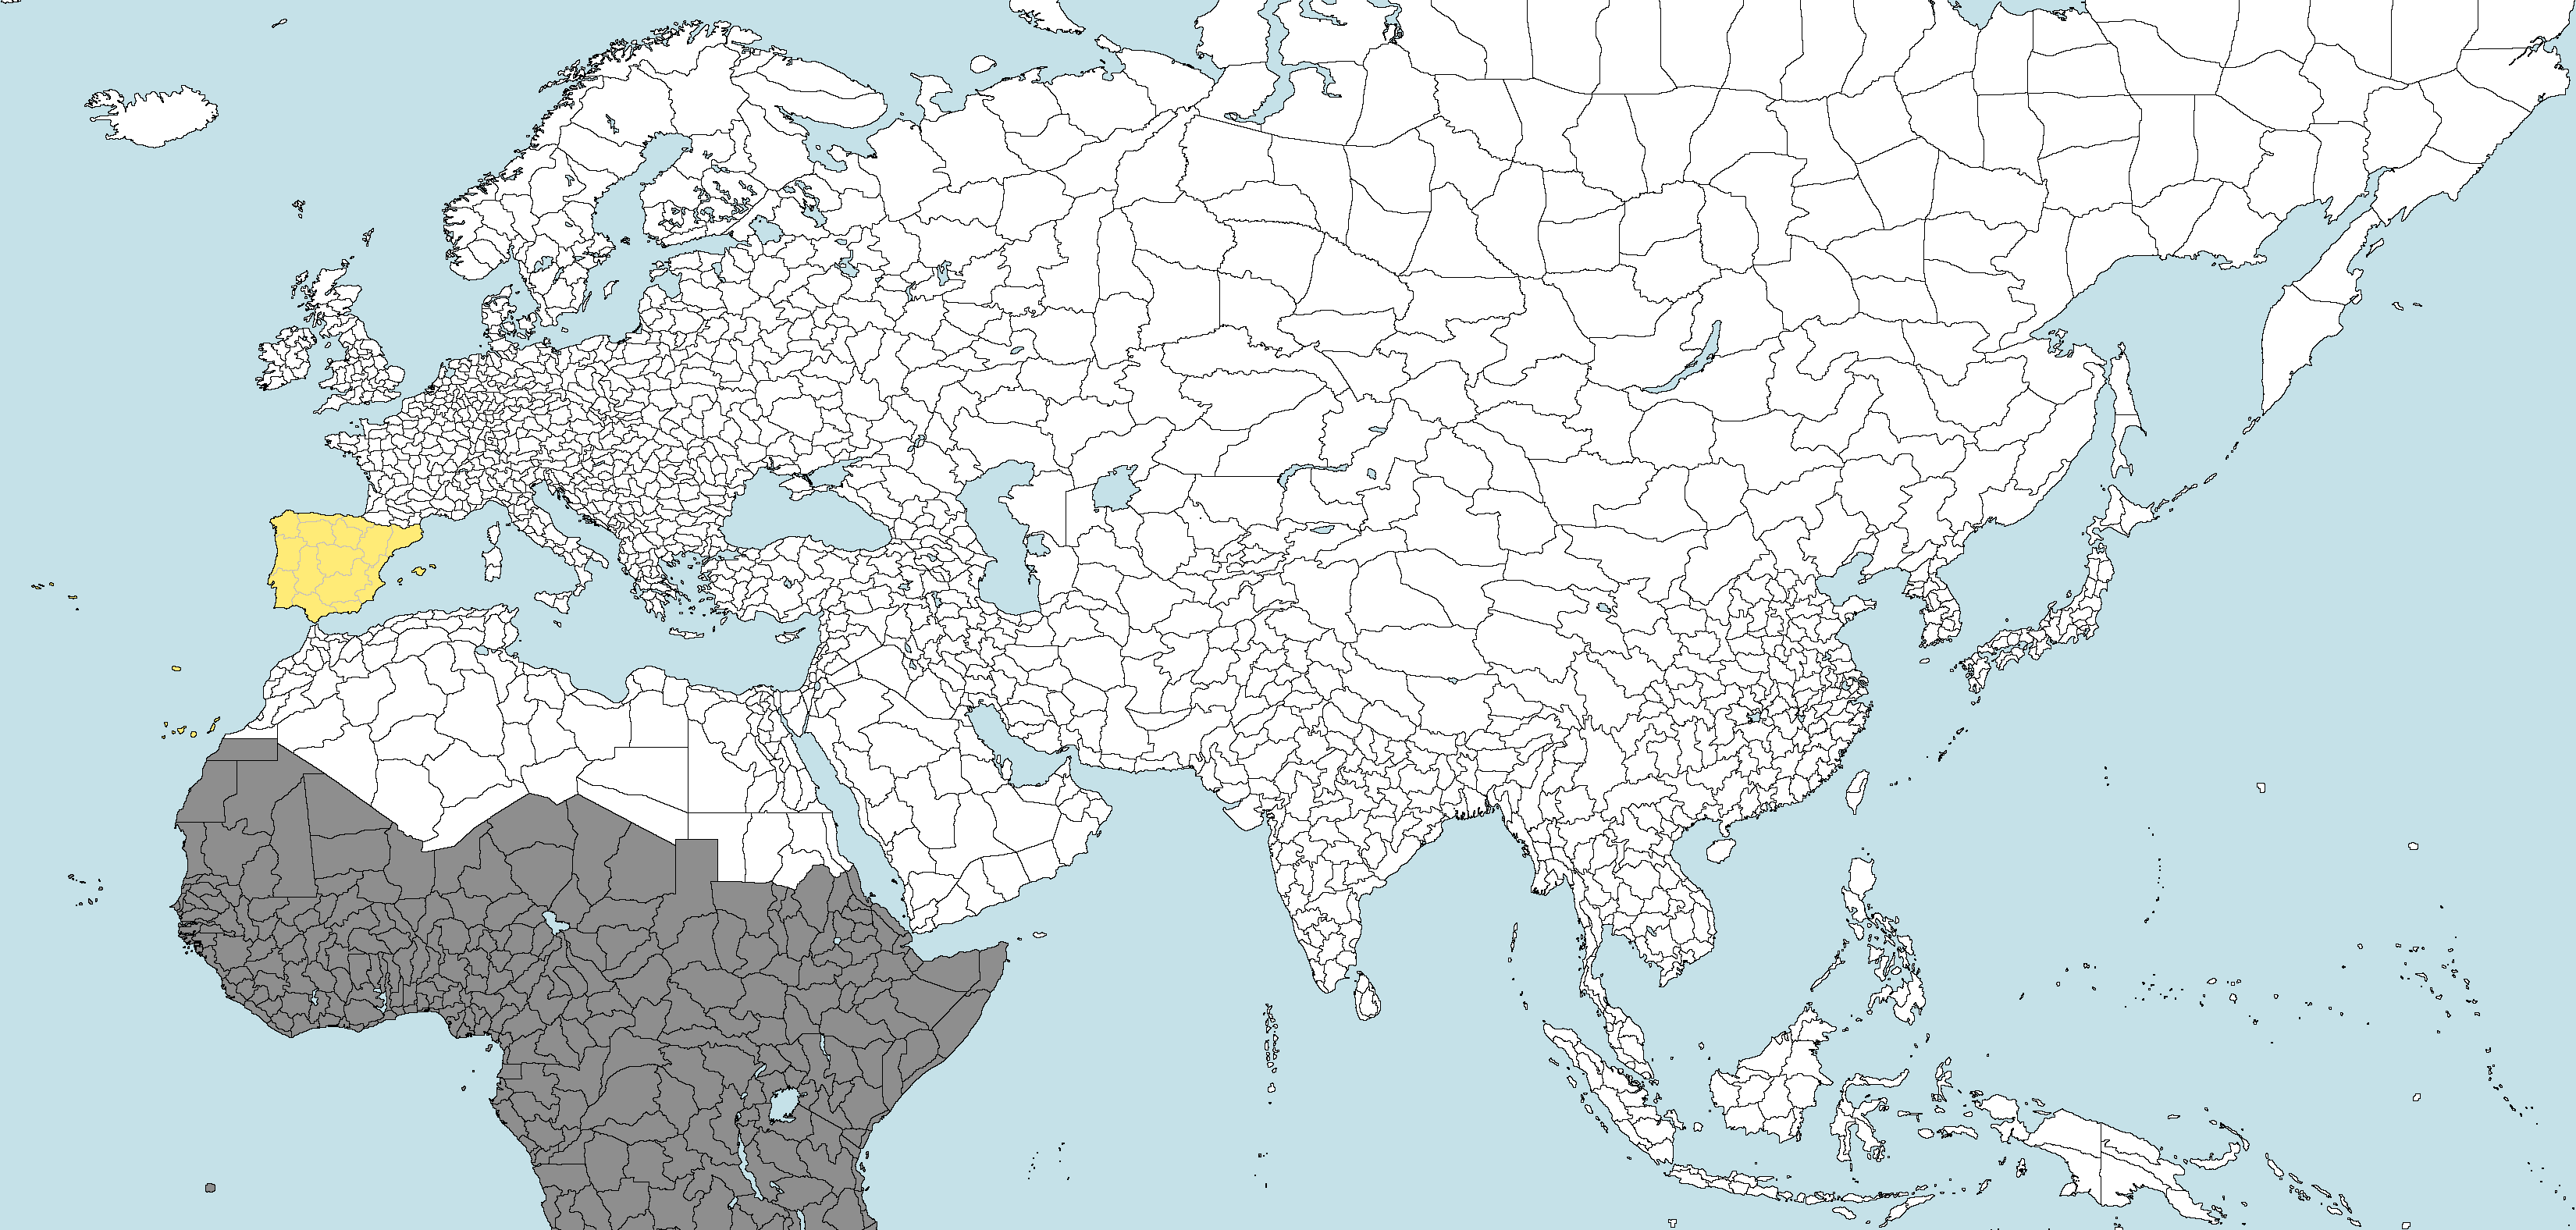 Карта провинций мира